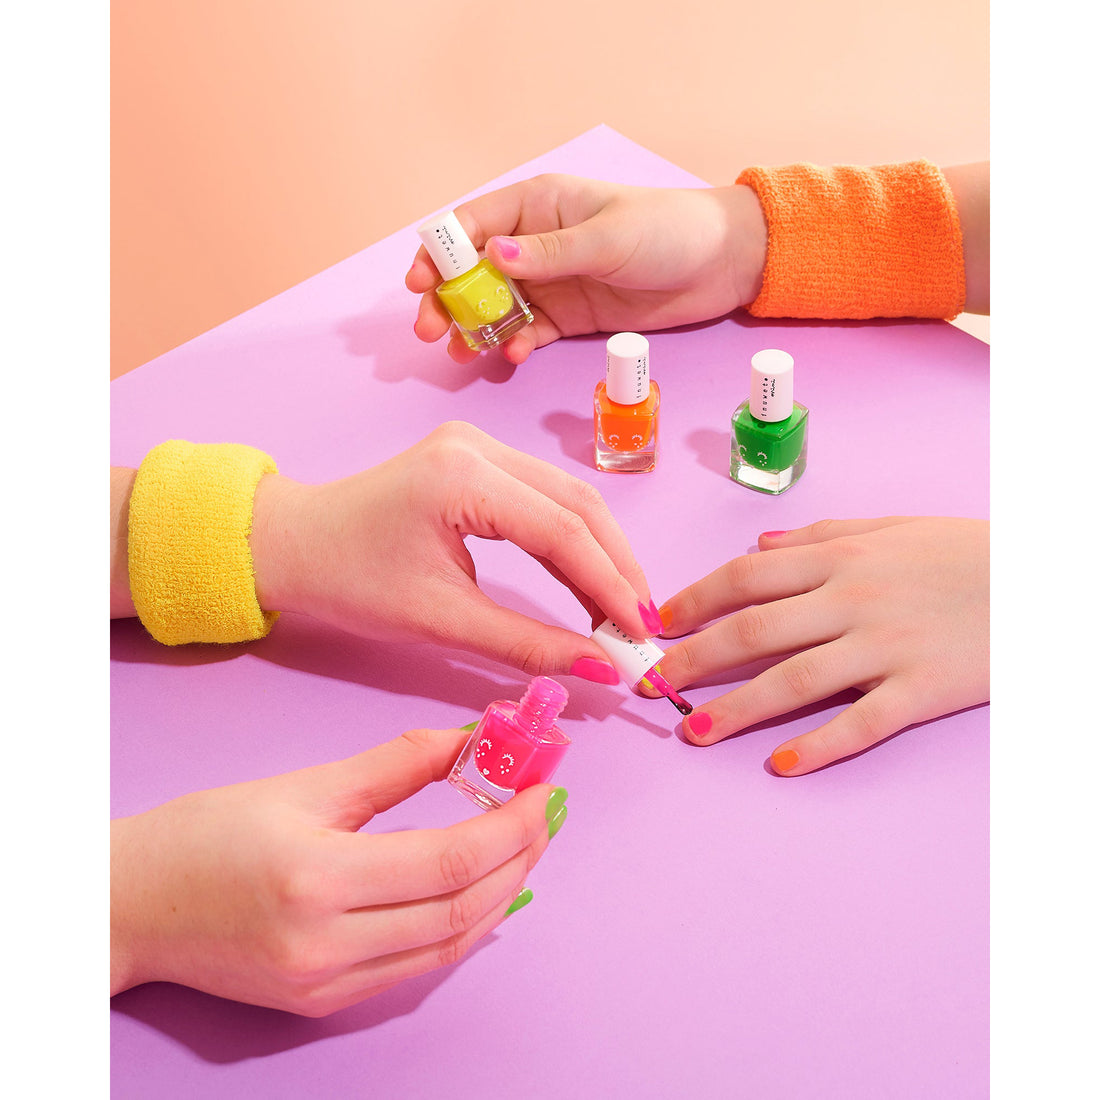 inuwet-neon-pink-bubble-gum-scent-for-kids-inuw-vinkv14